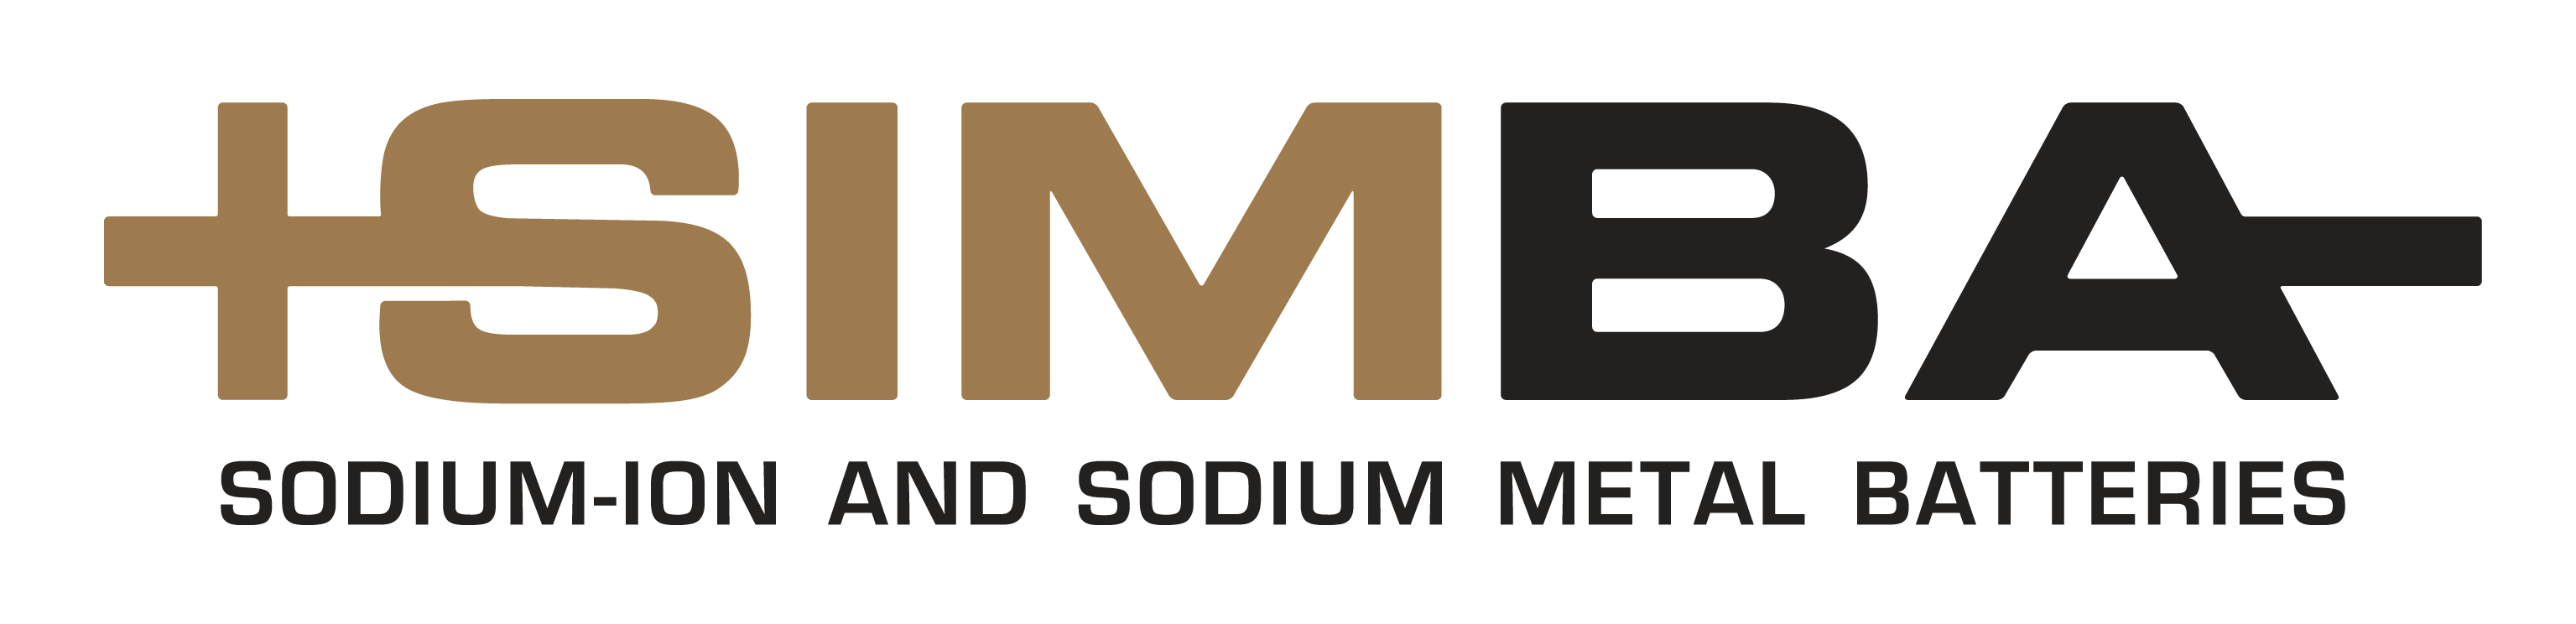 Project SIMBA: Sodium-Ion and Sodium Metal Batteries